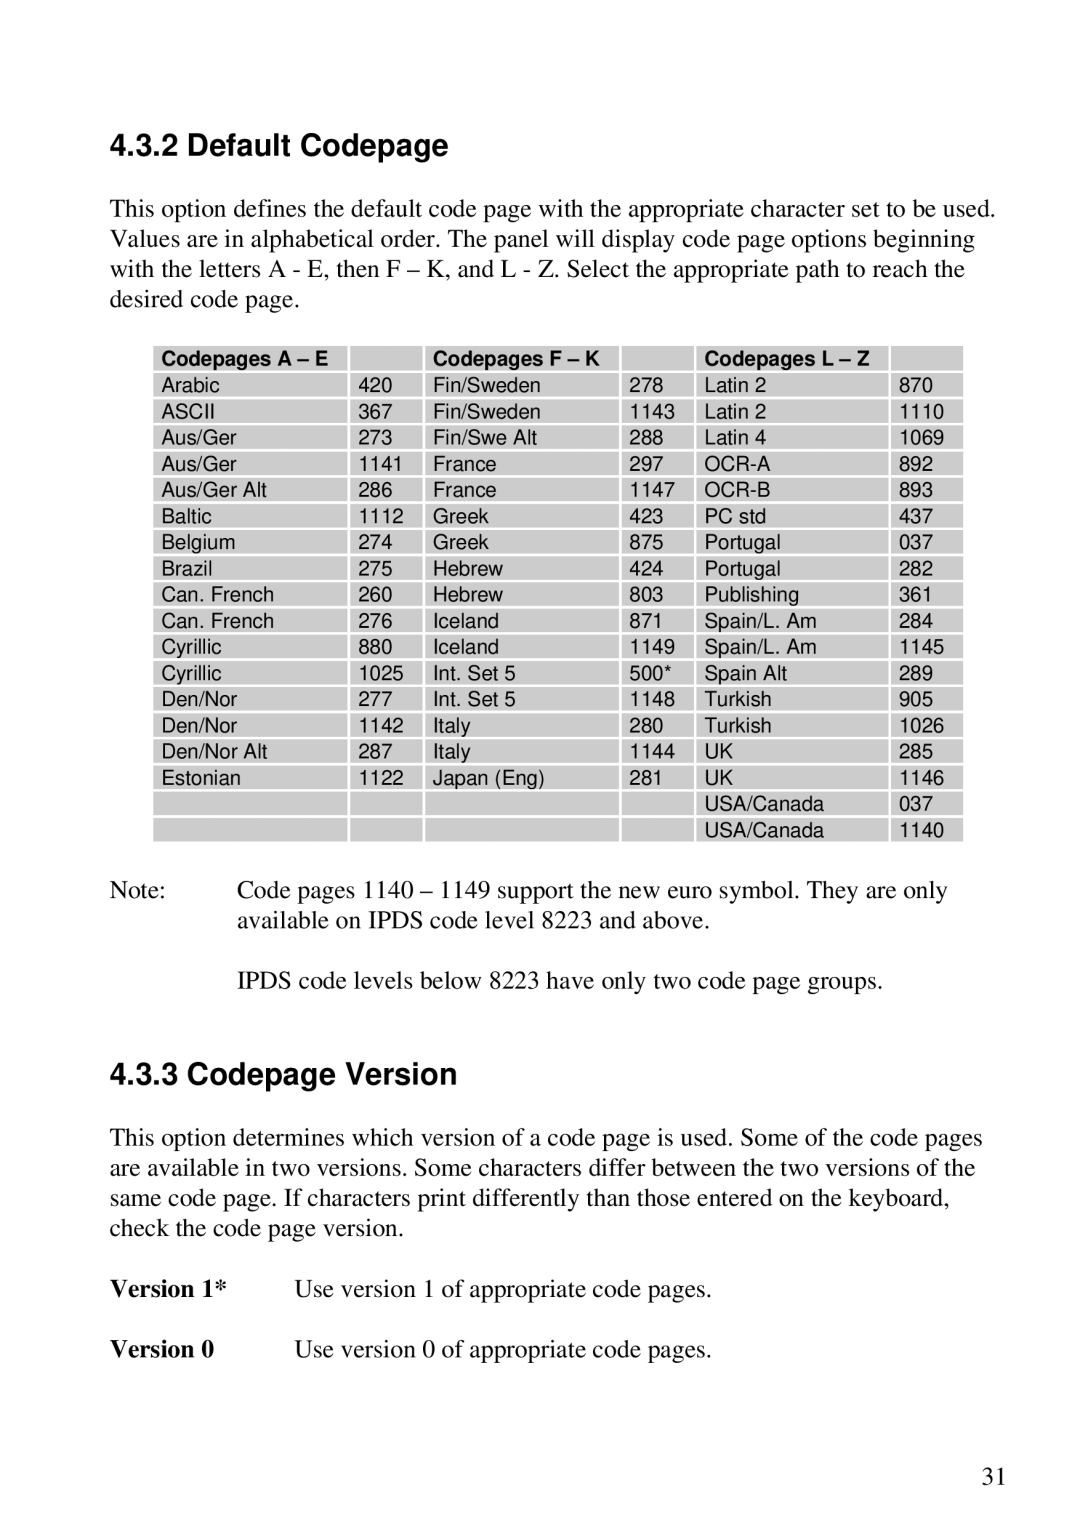 Lexmark Se 3455, K 1220 manual Default Codepage, Codepage Version 